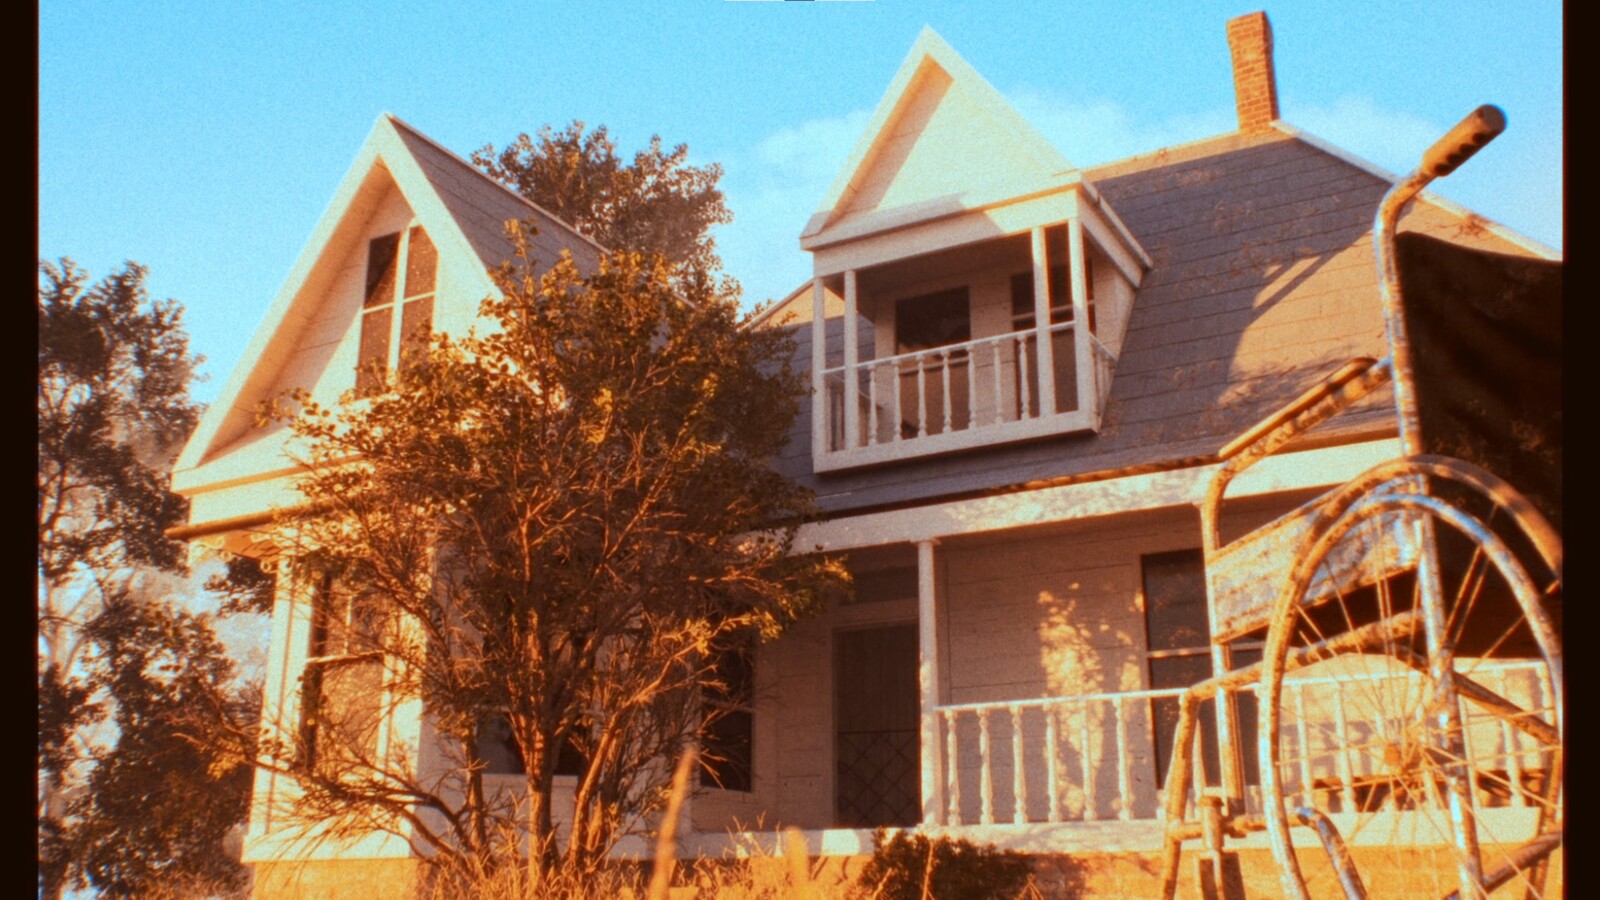 The Texas Chain Saw Massacre, Sawyer House (1974)